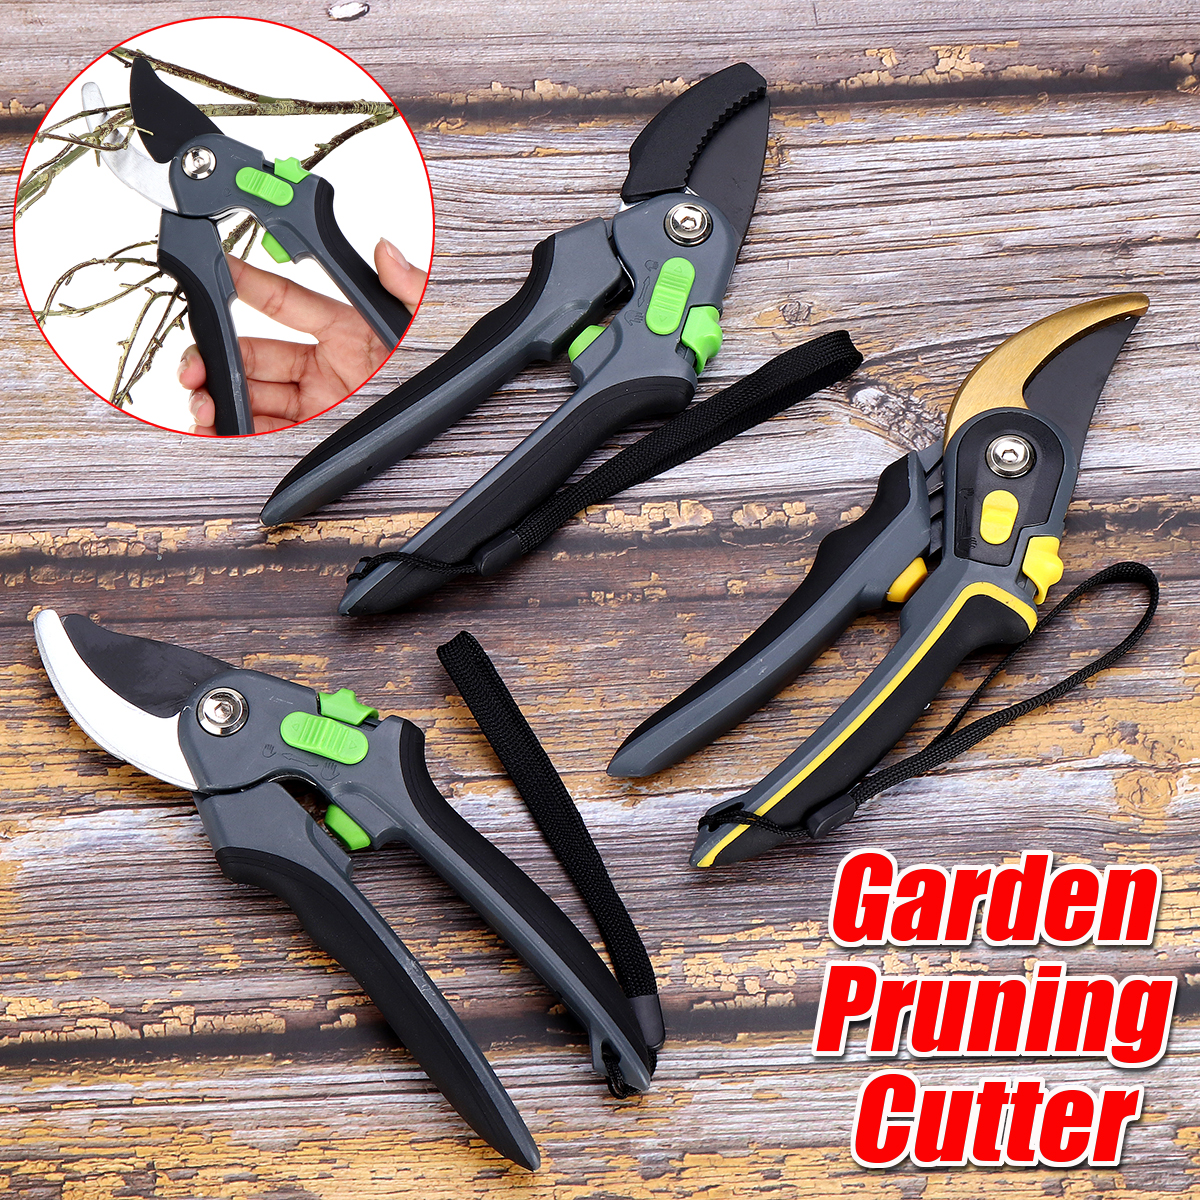 Pruning-Shear-Cutter-Garden-Tools-Labor-Saving-Steel-Scissors-Gardening-Plant-Branch-1693433-1